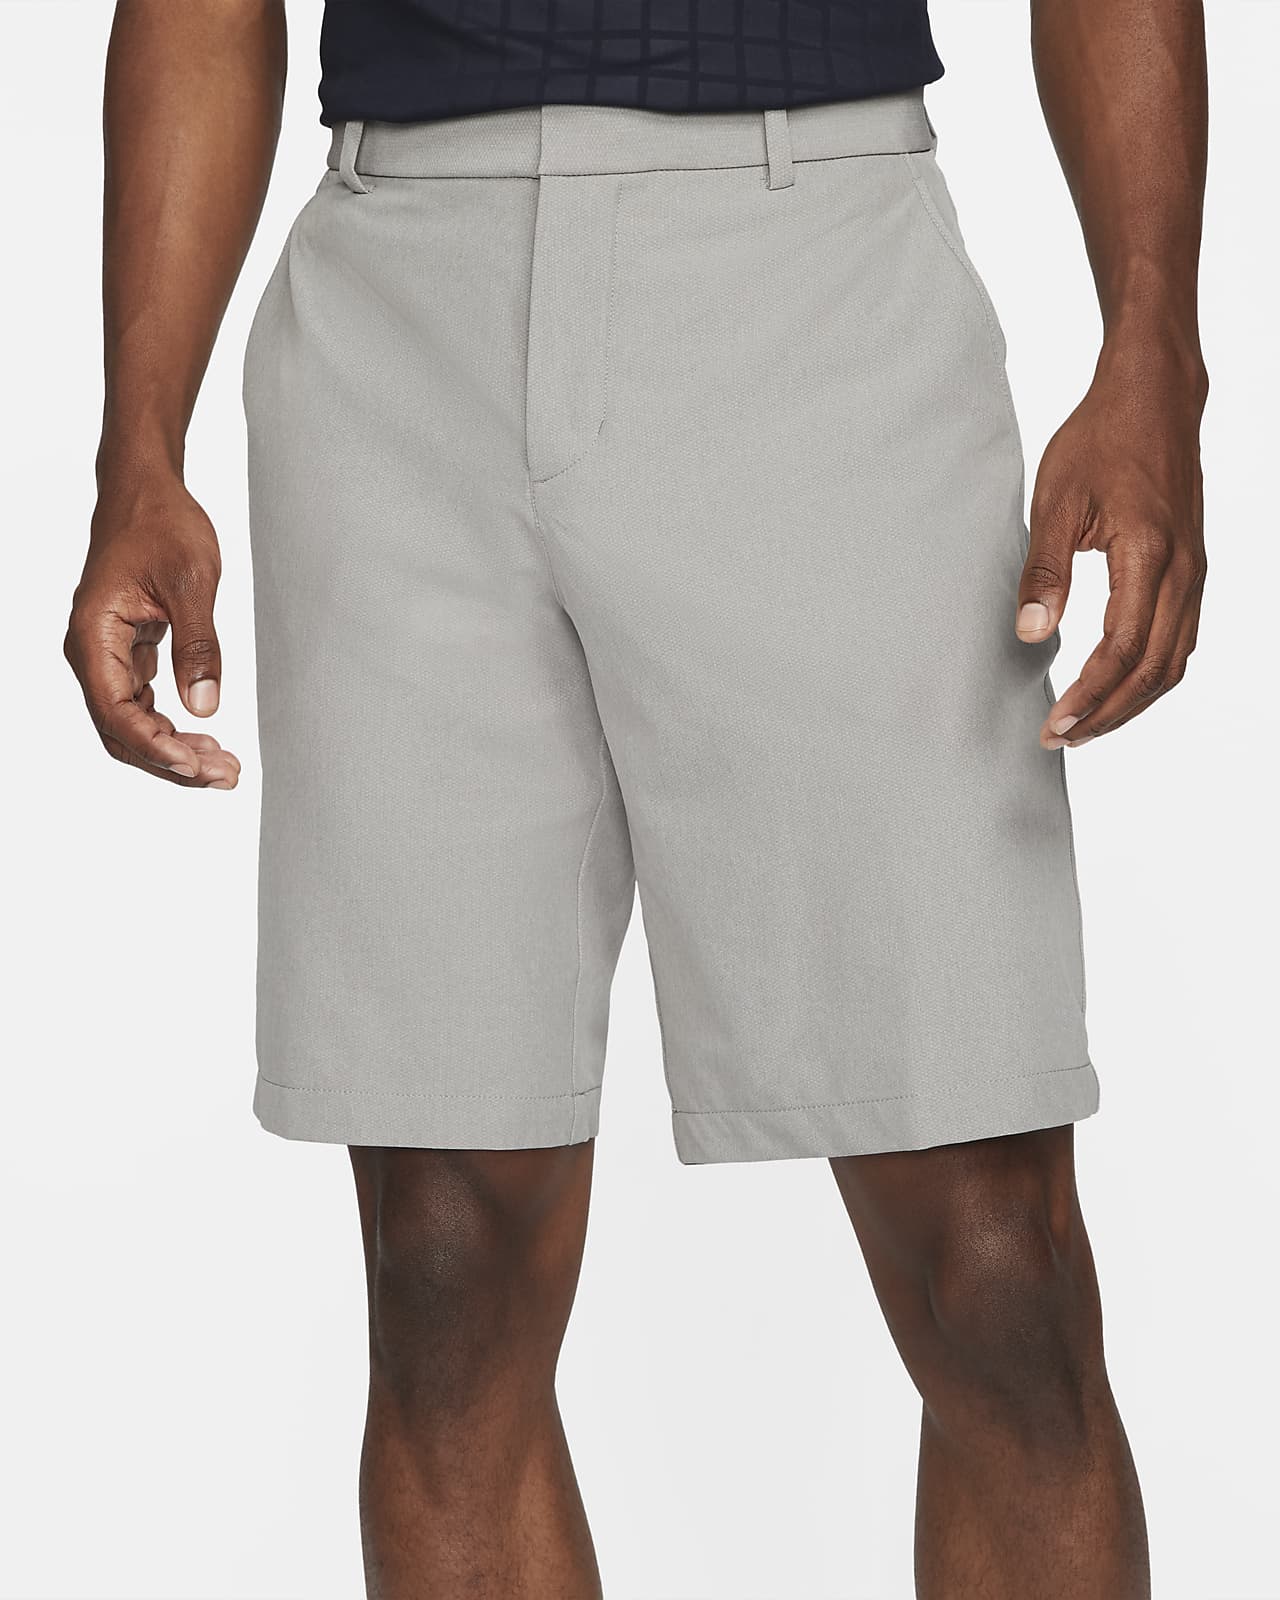 nike golf shorts standard fit